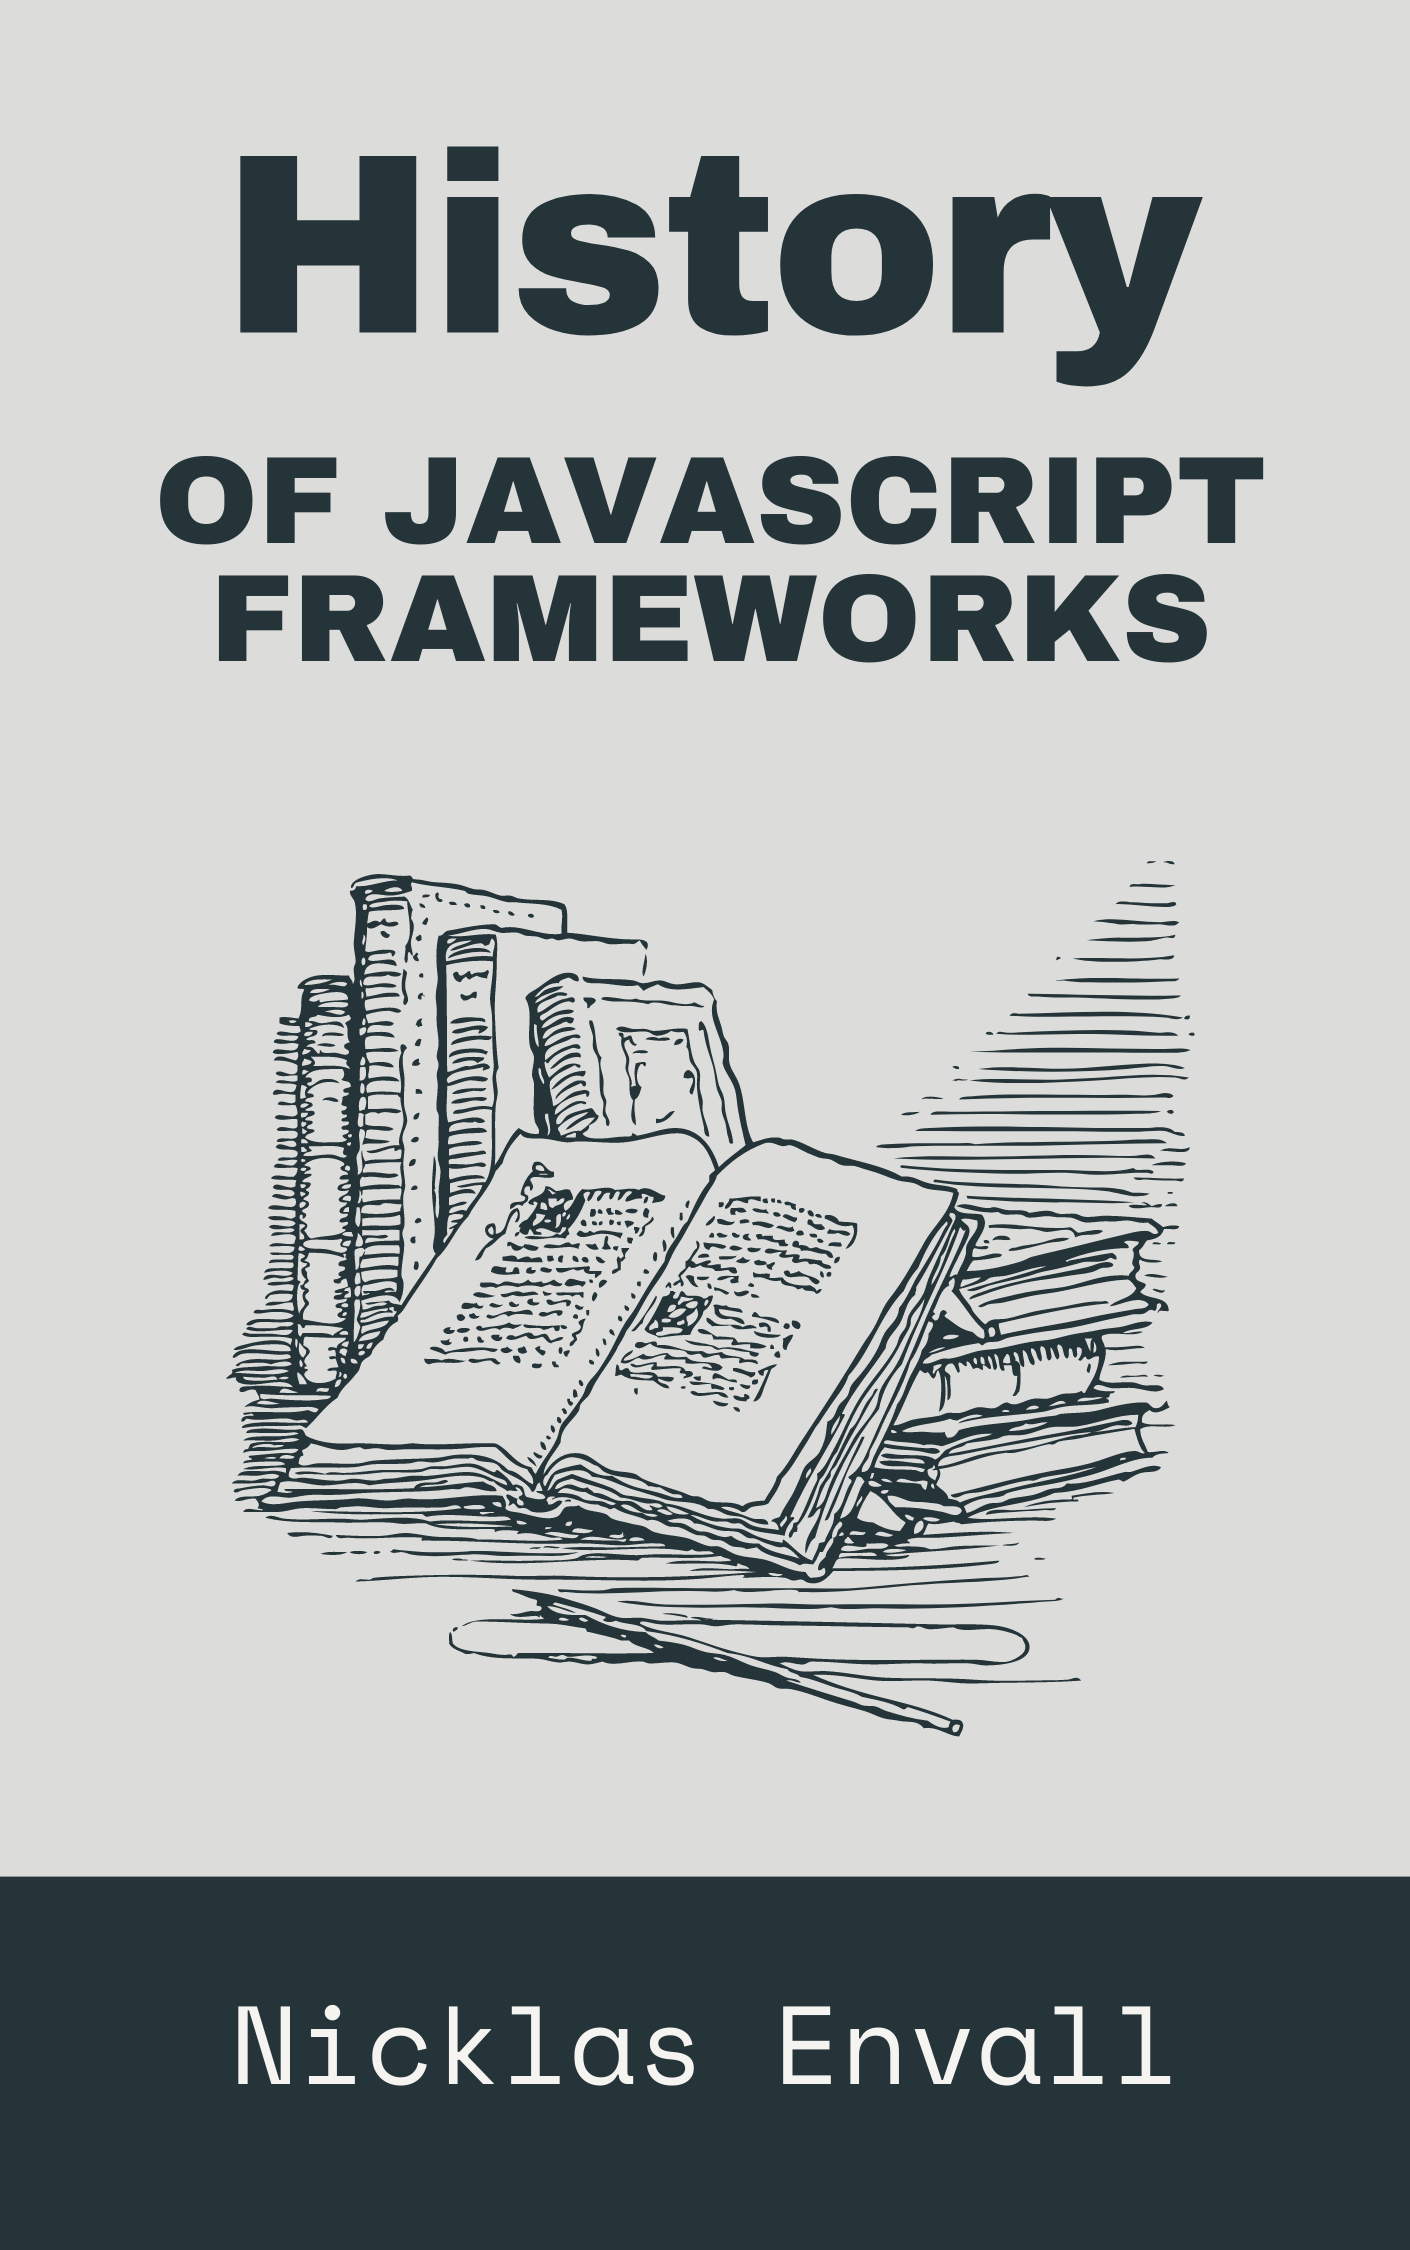 History of JavaScript Frameworks by Nicklas Envall